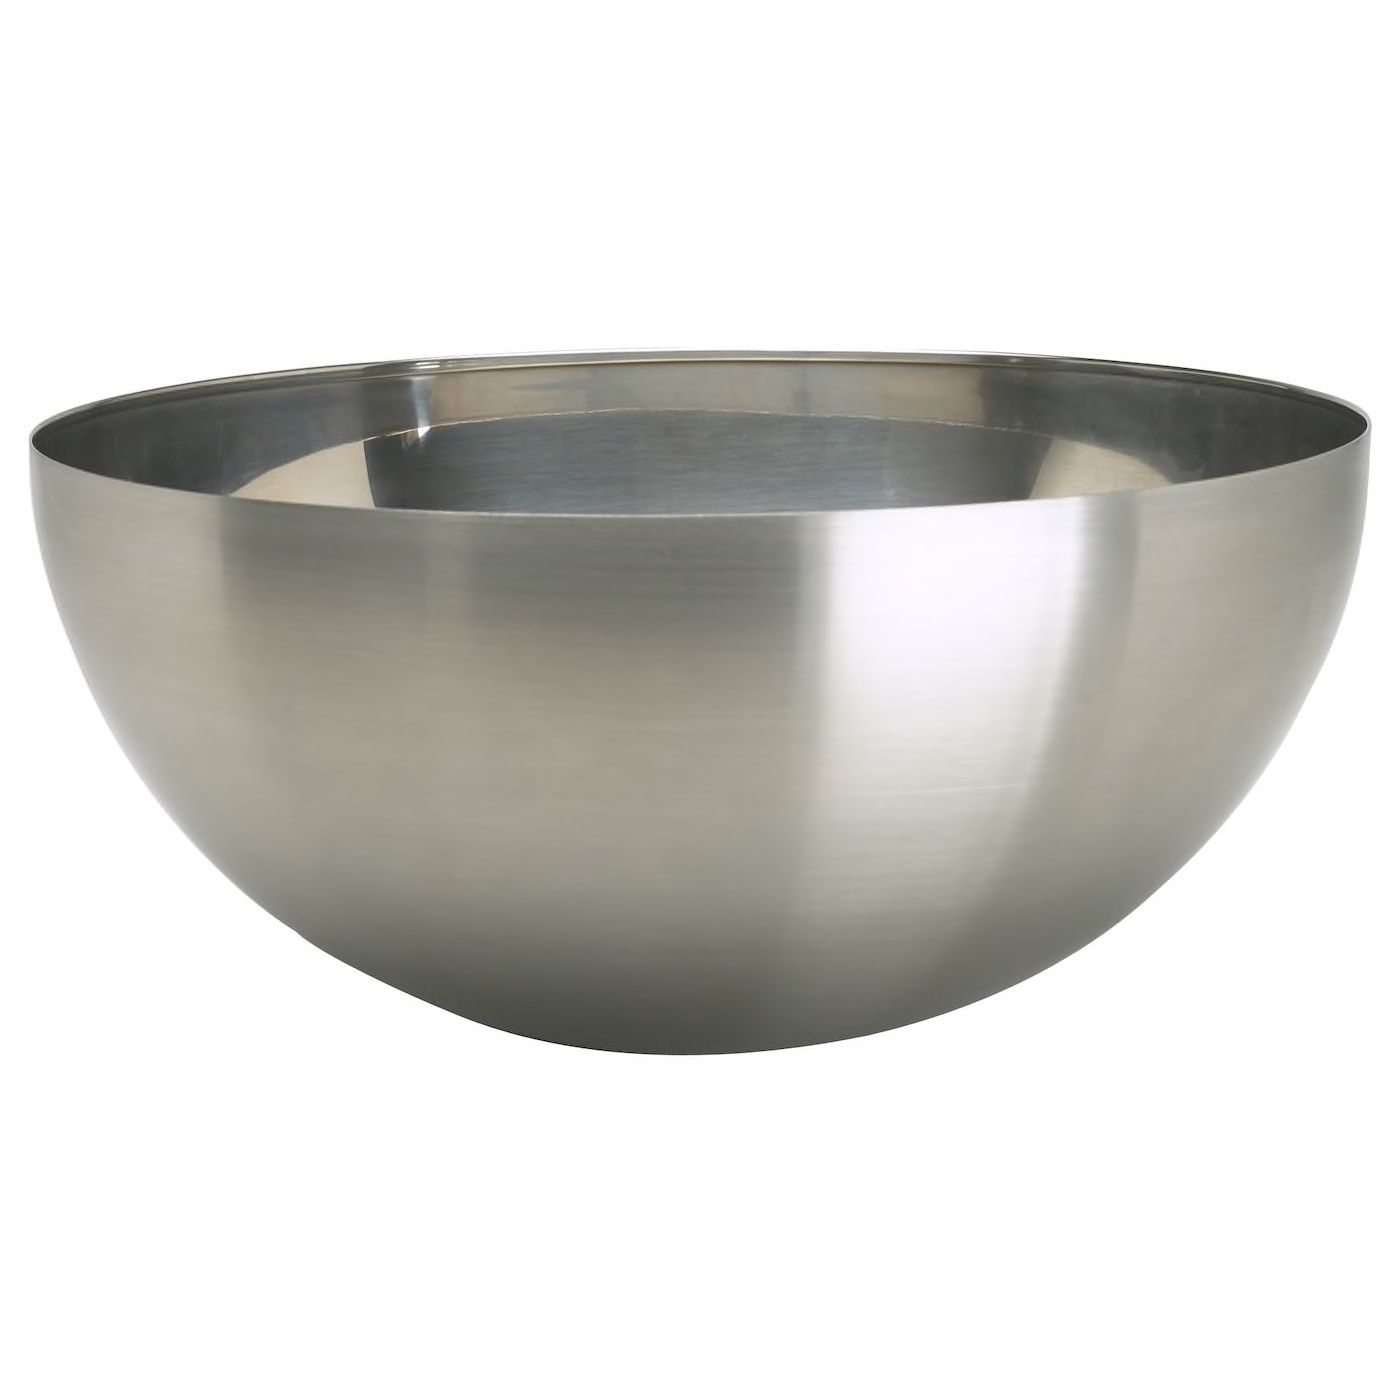 Stainless Steel Mixing/Salad Bowl - 14” Diameter, 6” Deep